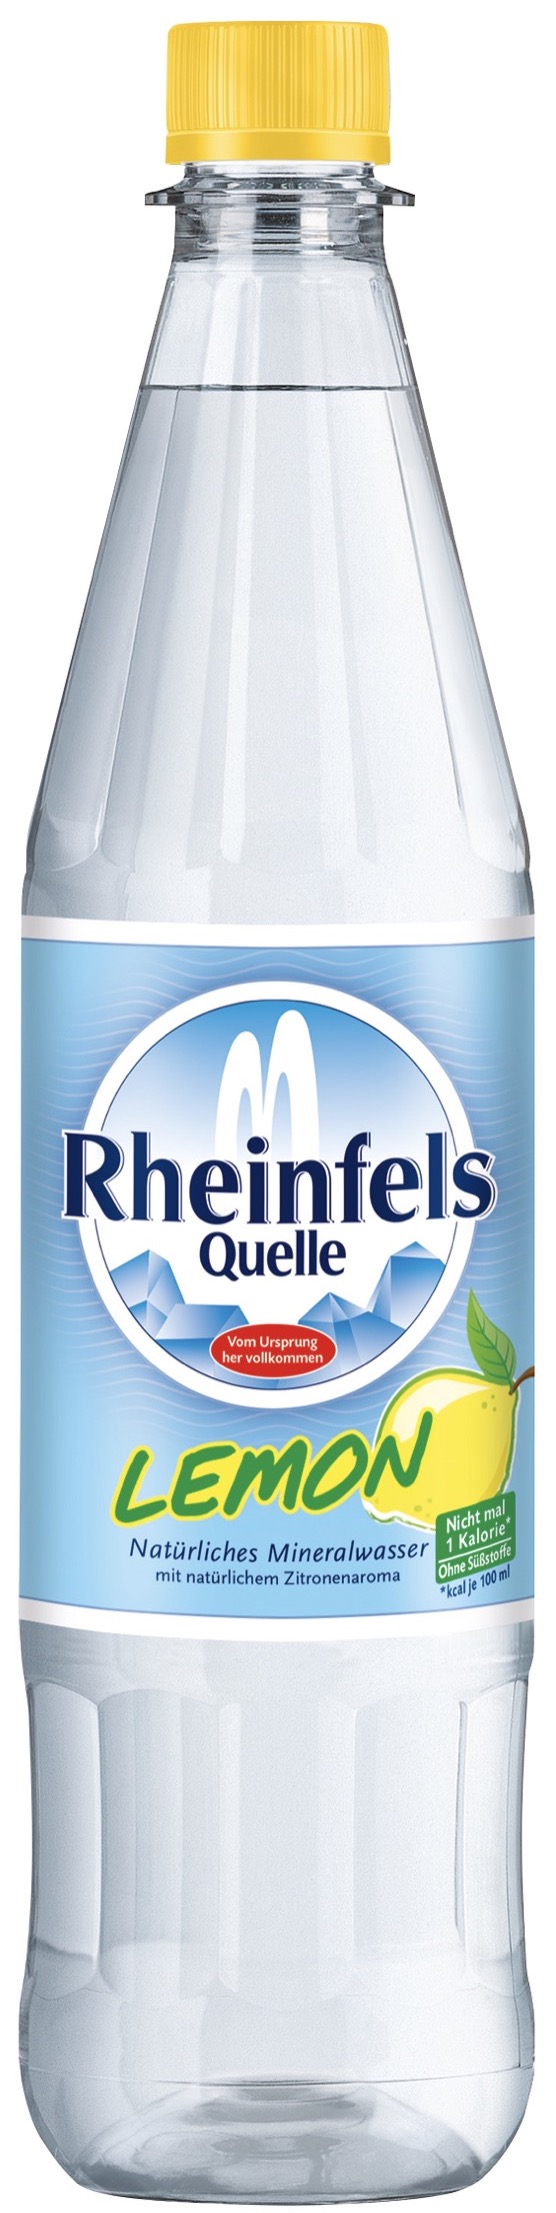 Rheinfels Quelle Lemon 0,75L MEHRWEG